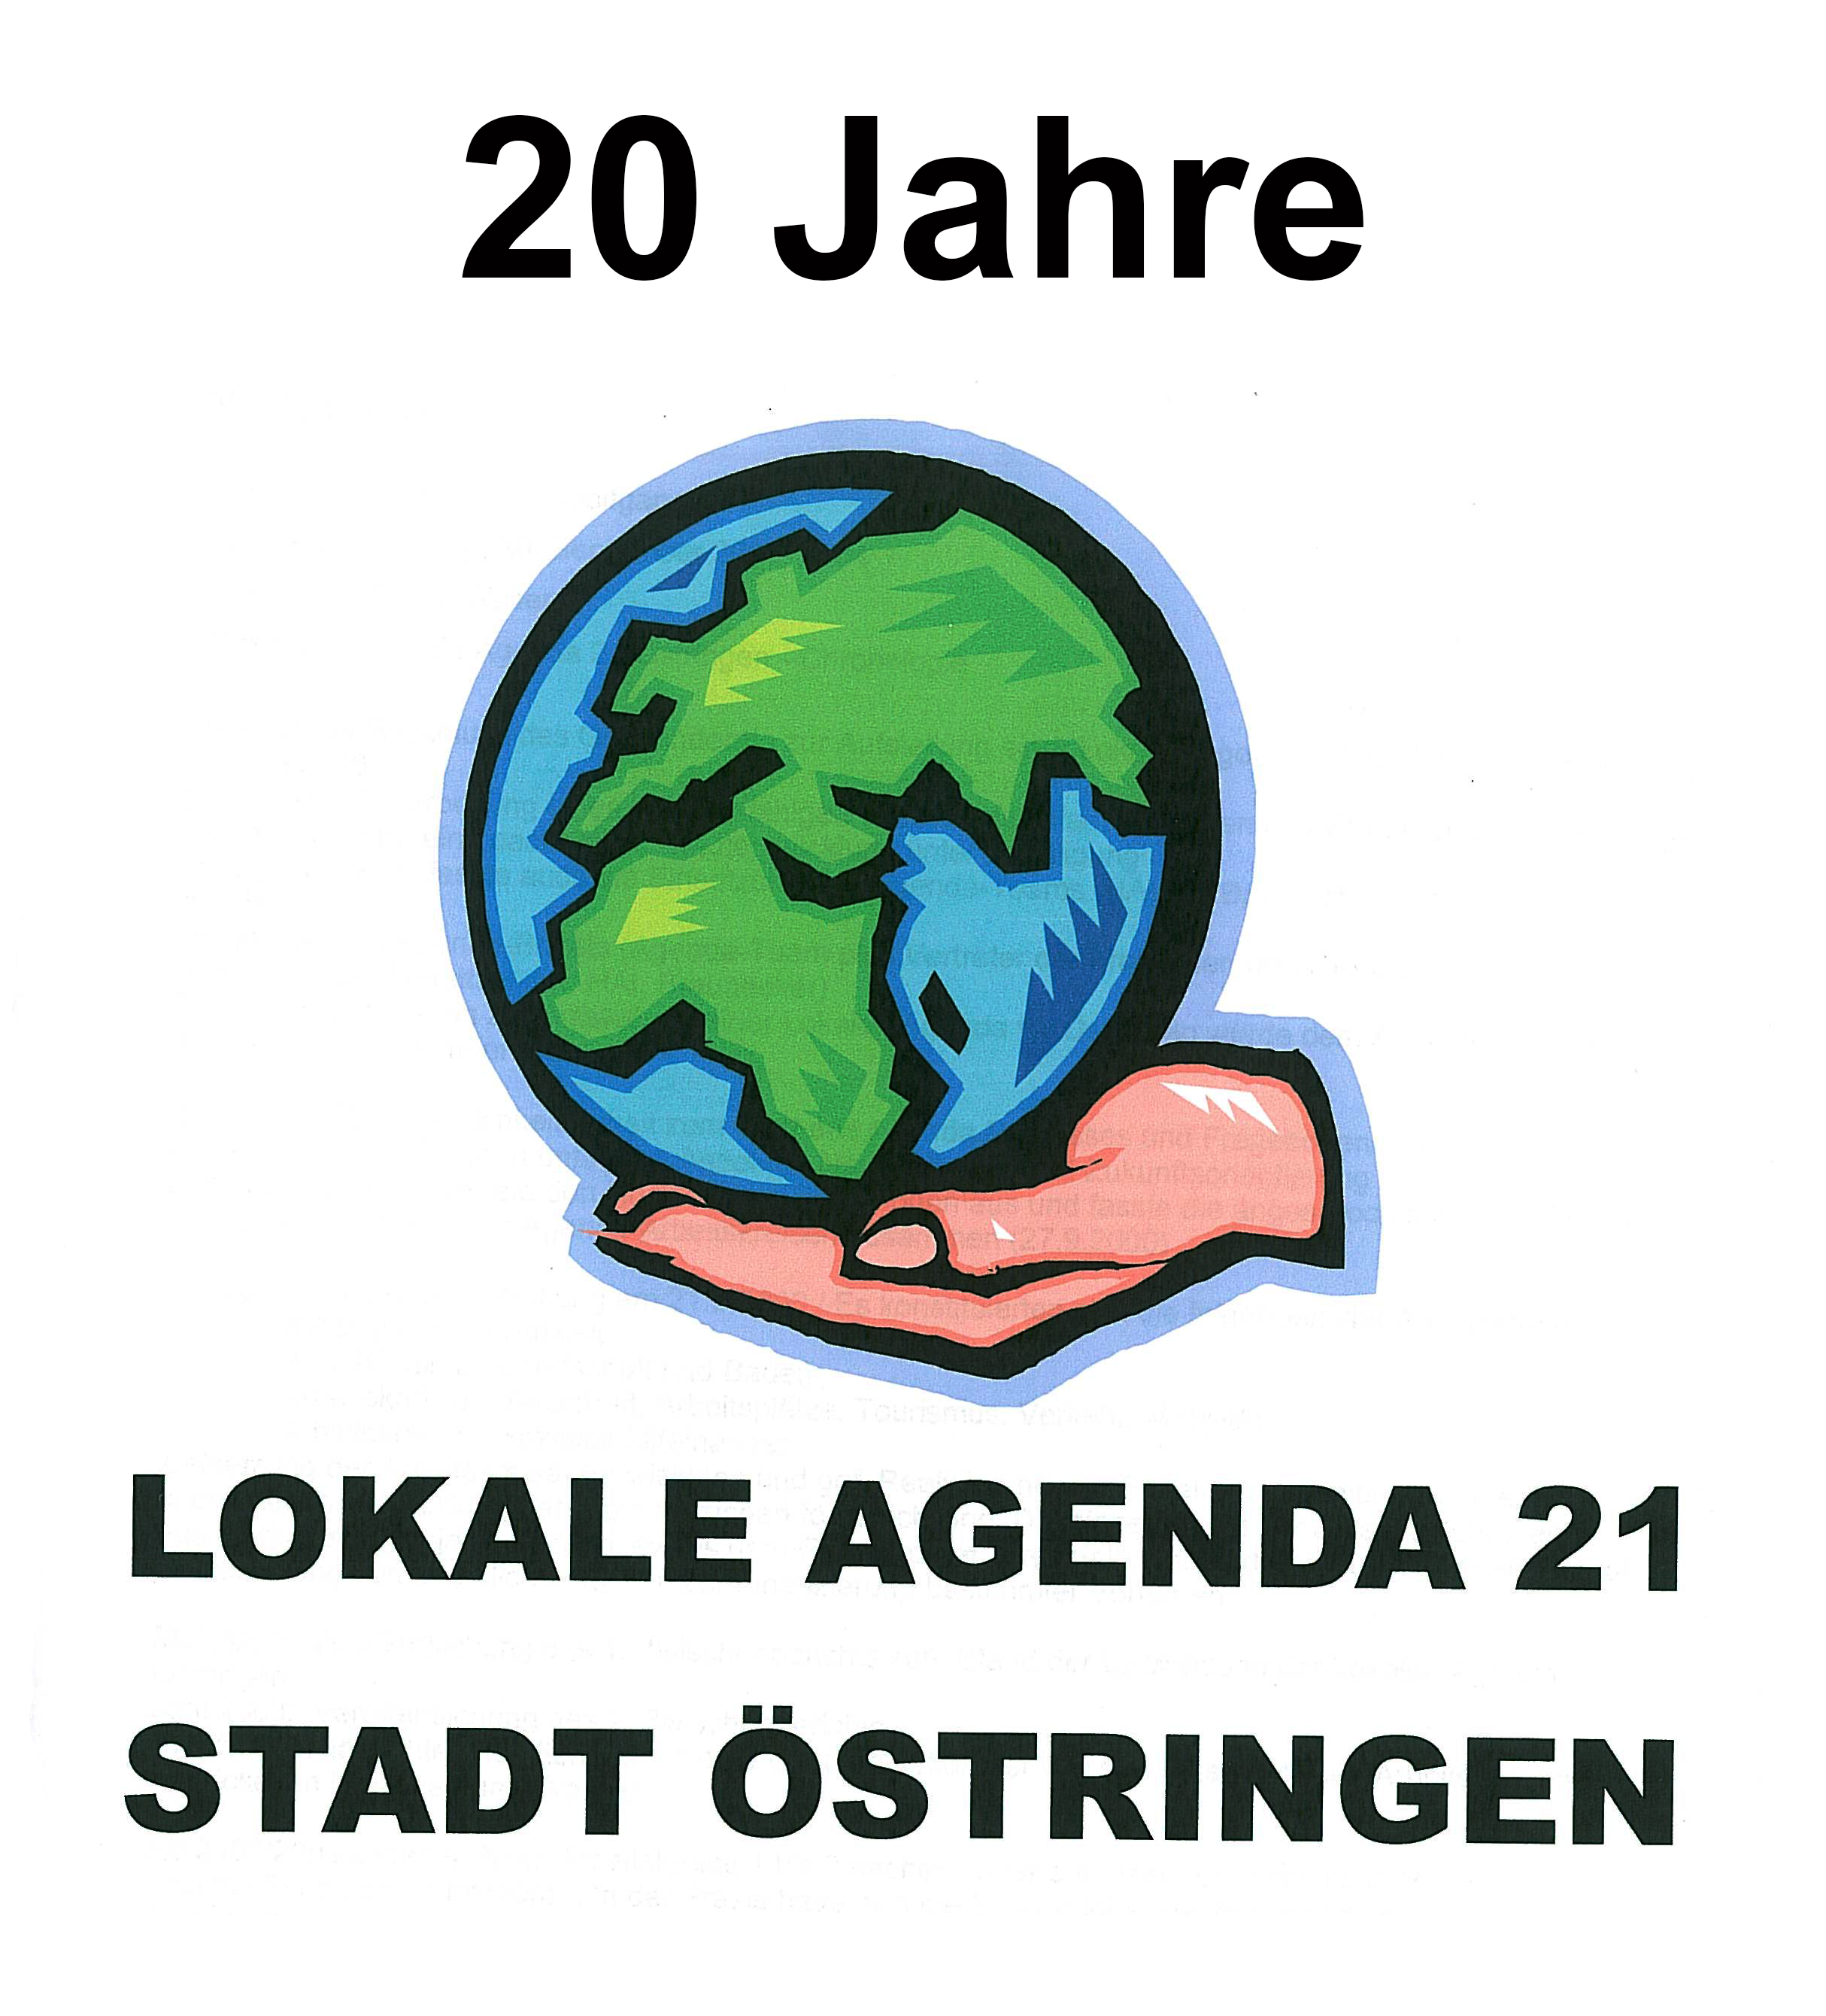  Logo `20 Jahre Lokale Agenda 21 der Stadt Östringen´ 